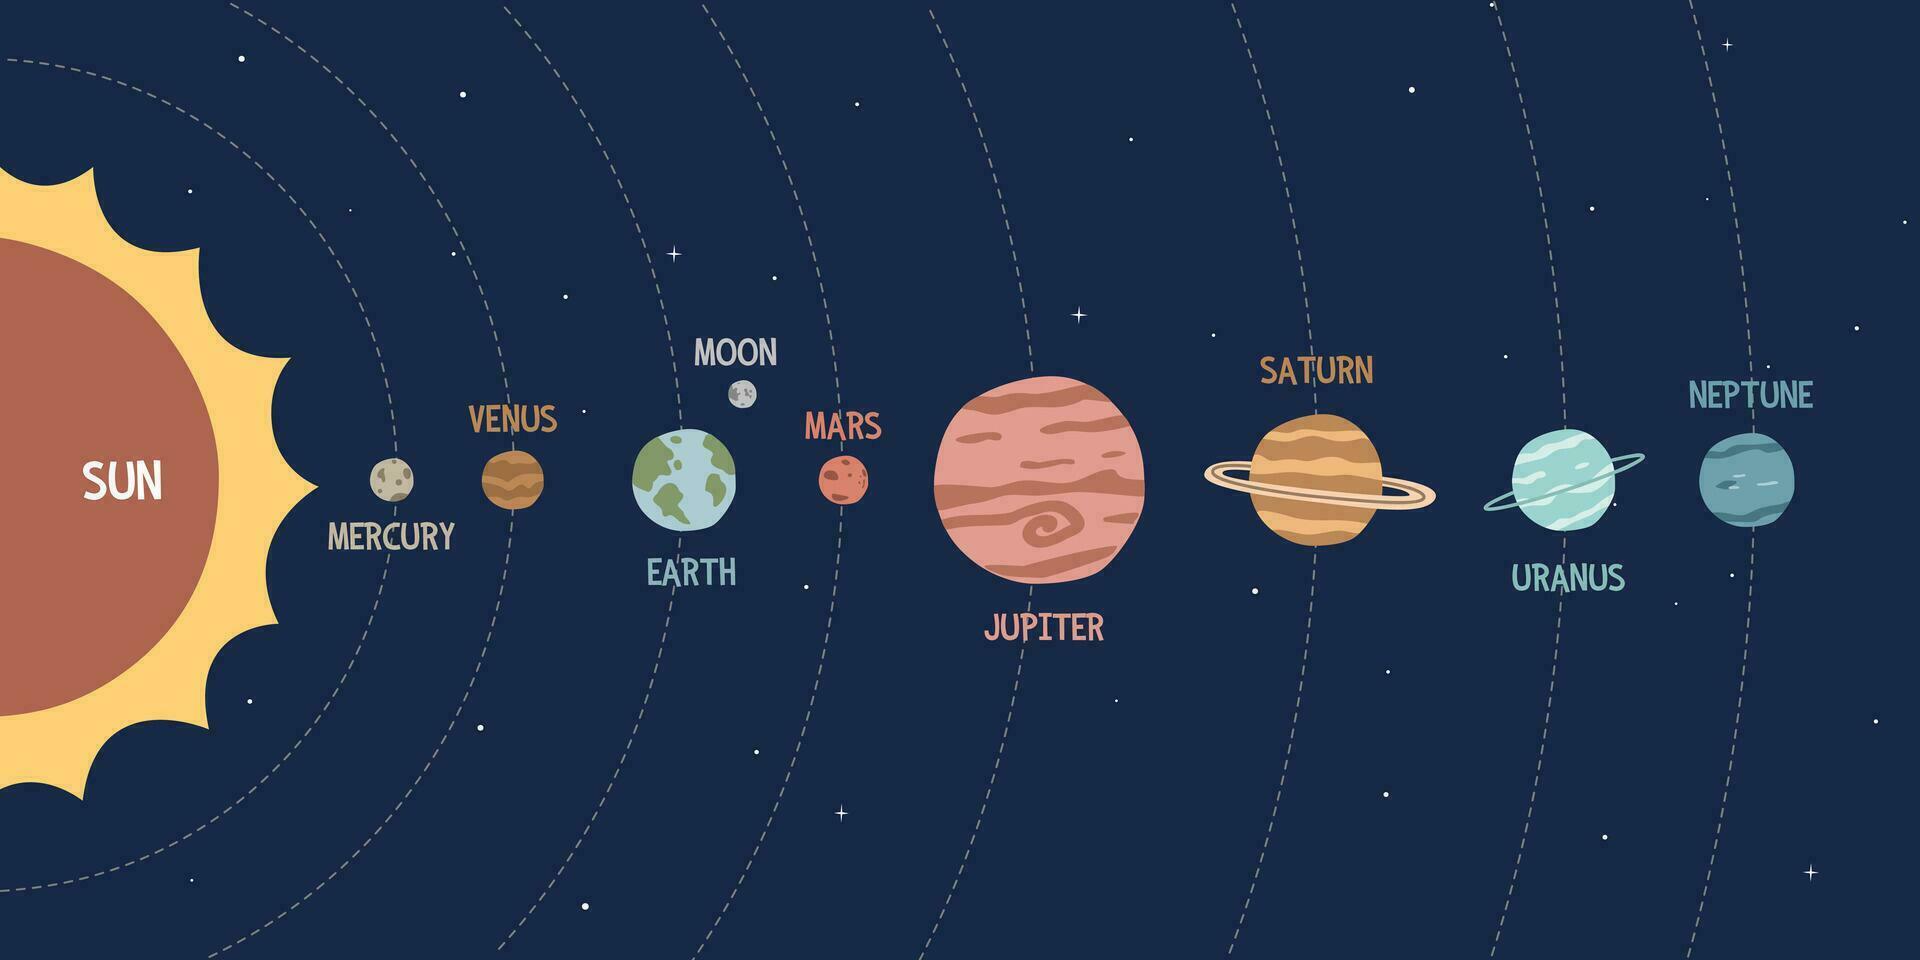 Solar System cartoon clipart. Colorful Solar System planets with orbits flat vector illustration hand drawn style. Sun, Mercury, Venus, Earth, Mars, Jupiter, Saturn, Uranus, Neptune planets clip art